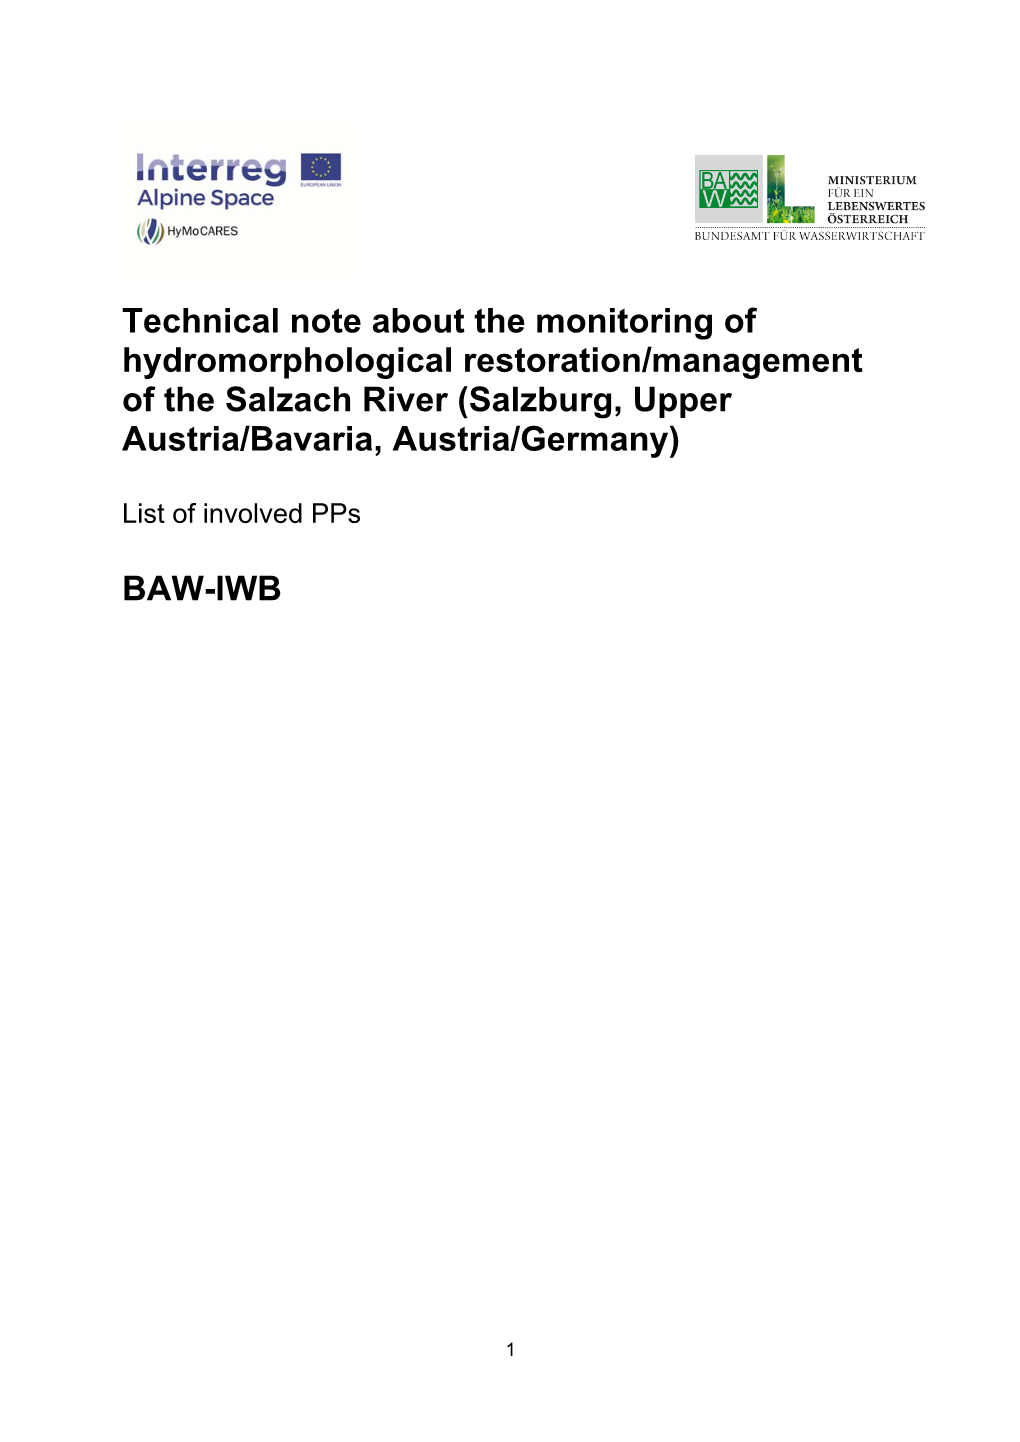 Salzach Technical Report on Monitoring